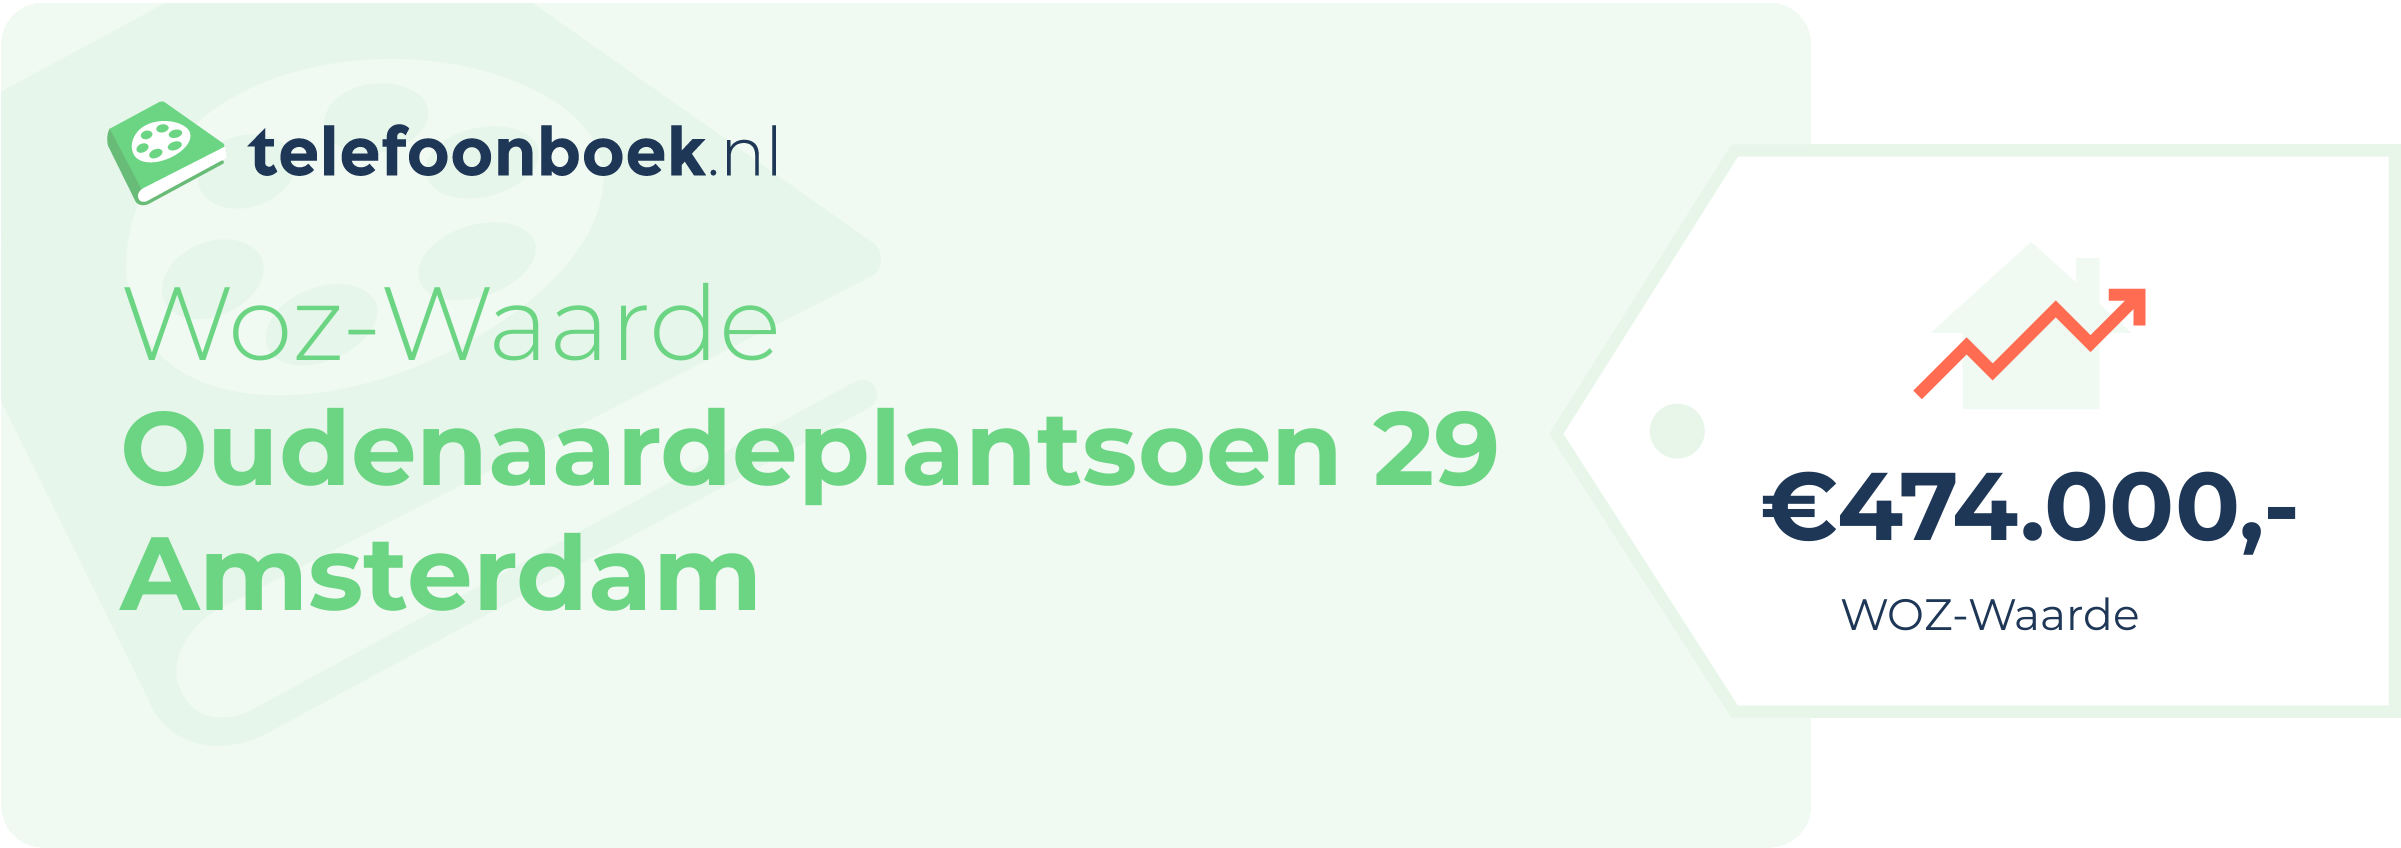 WOZ-waarde Oudenaardeplantsoen 29 Amsterdam